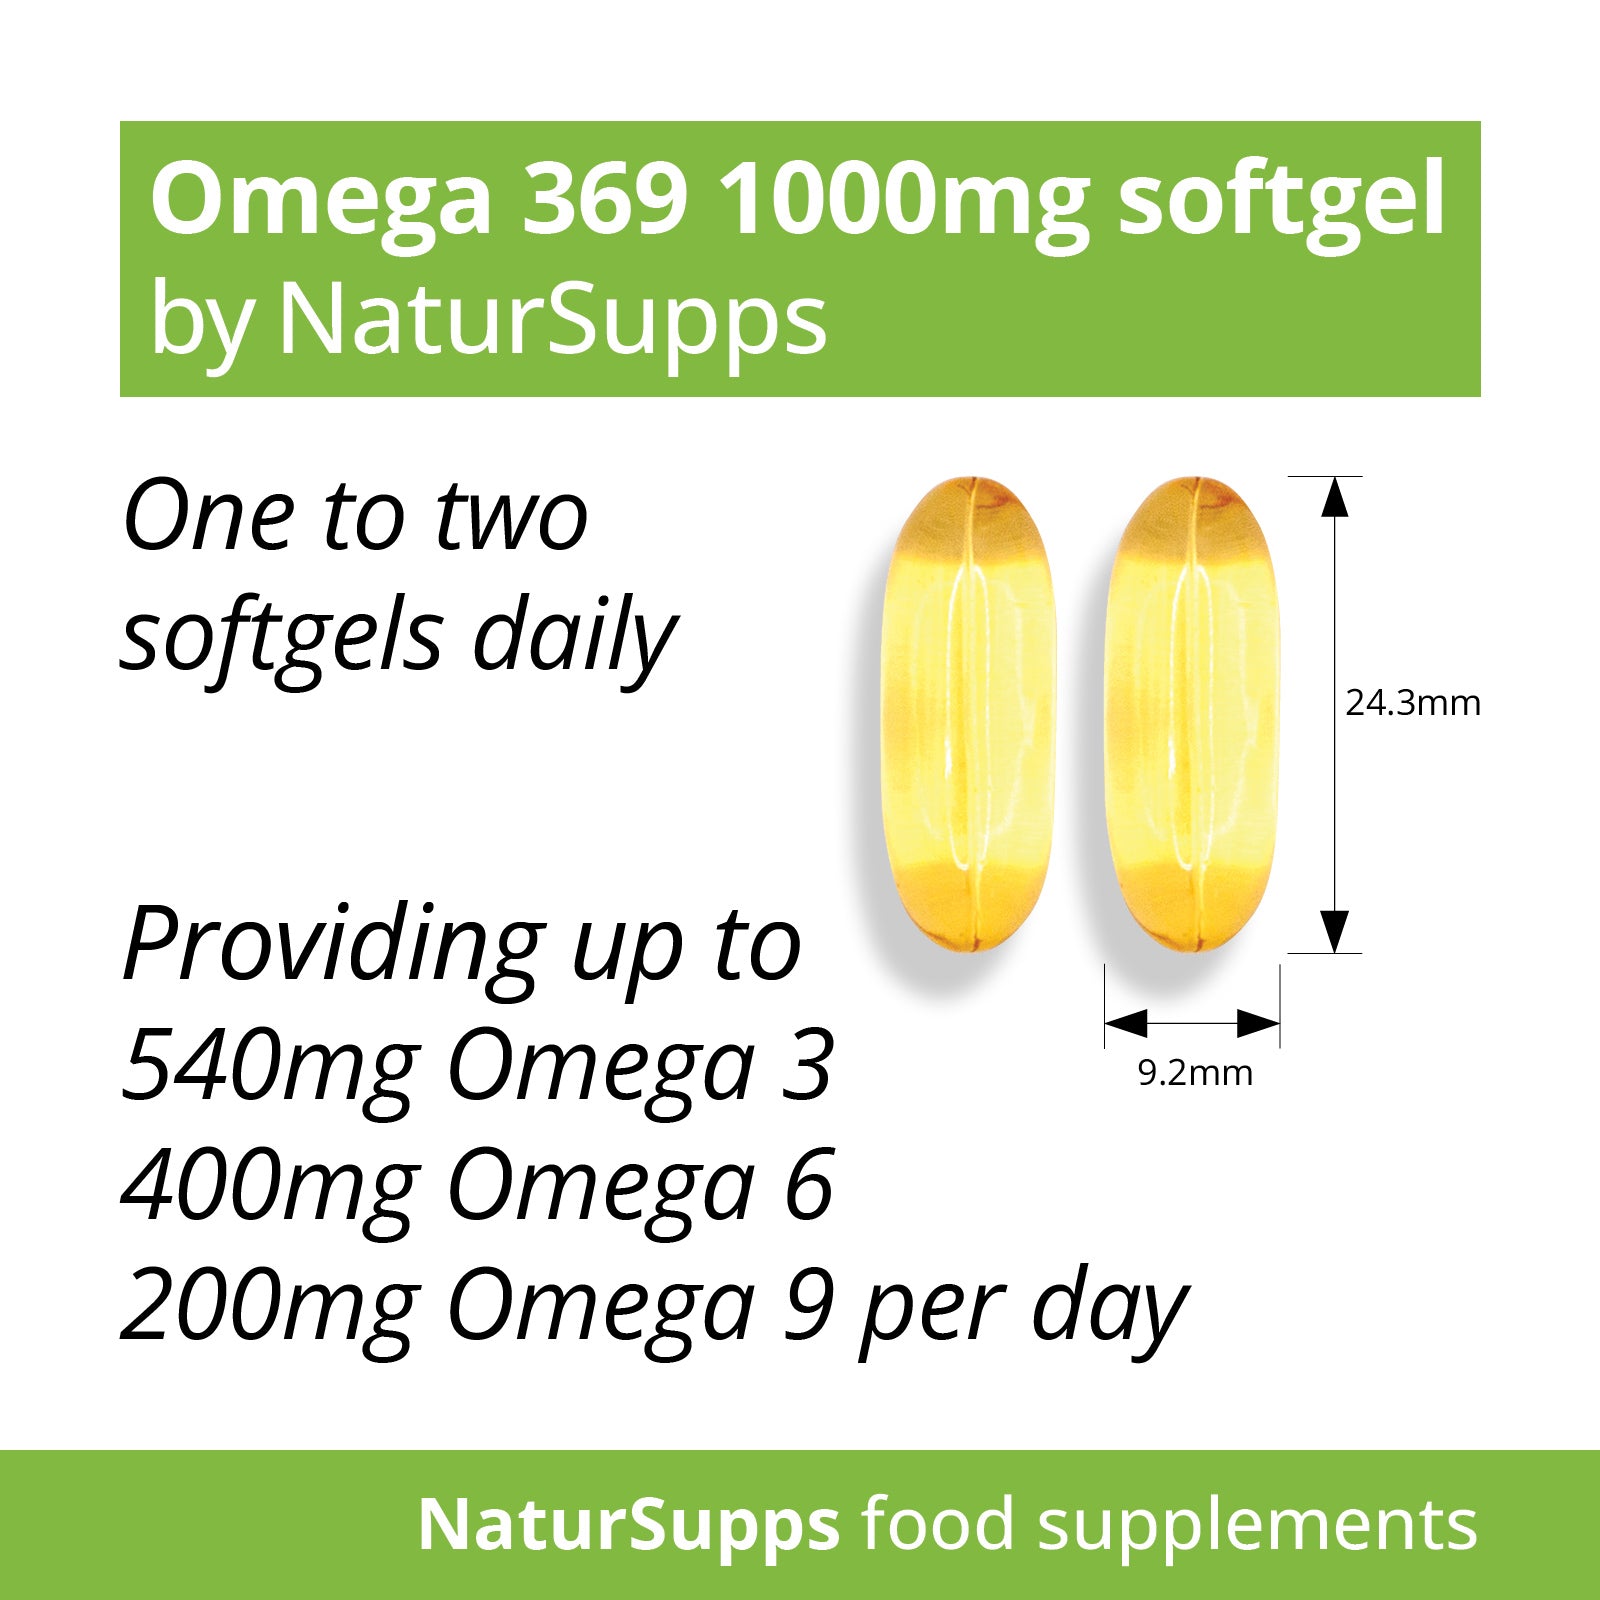 Omega 369 Capsules 1000mg, Omega 3 6 9 Softgels, Fish, Flaxseed & Sunflower Seed Oils